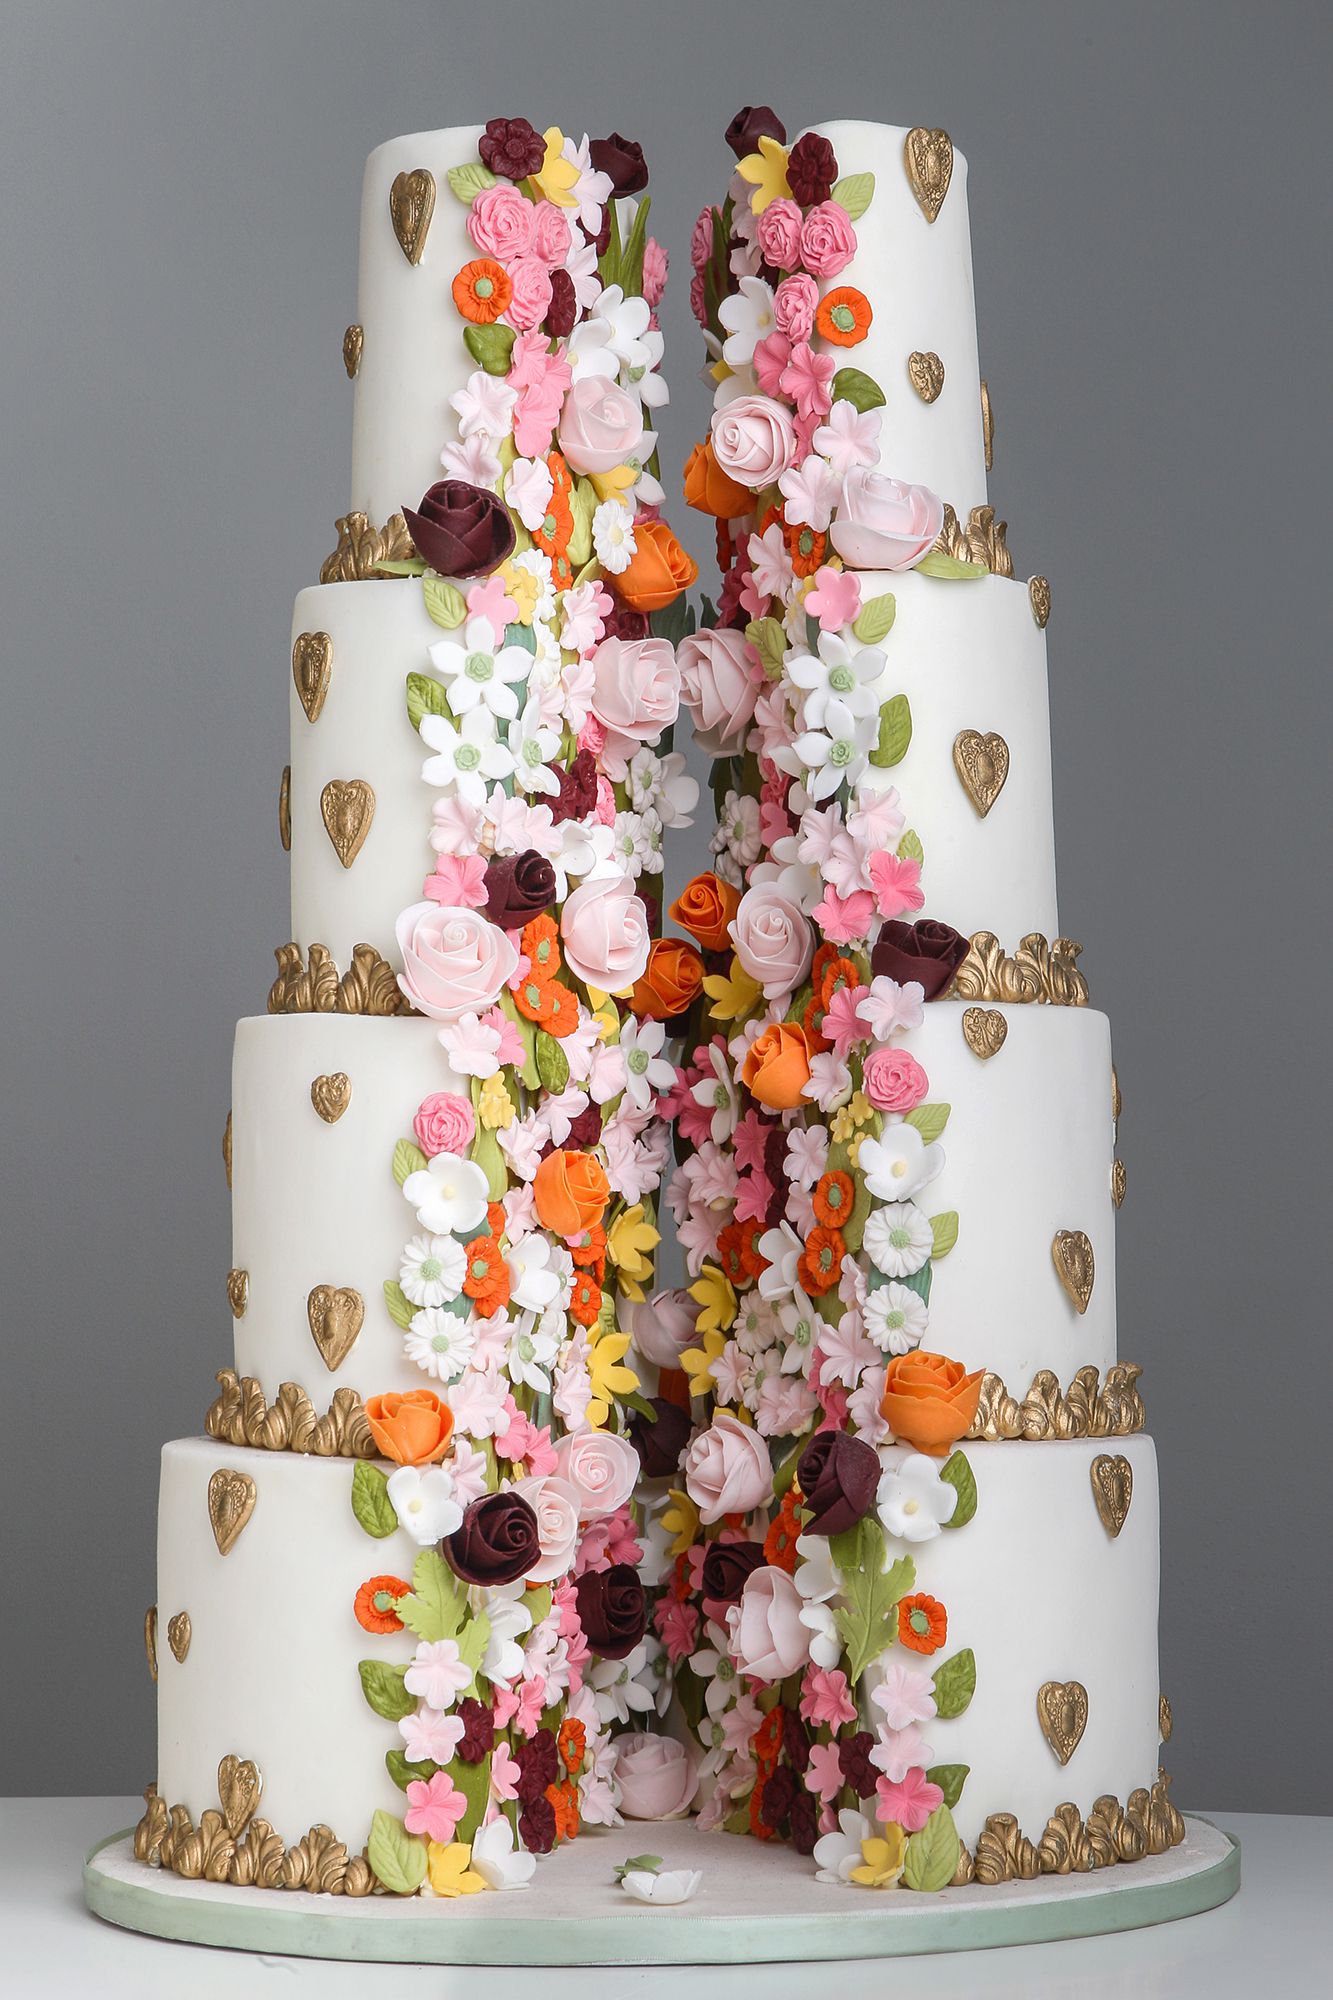 15 Elegant Fall Wedding Cakes - Ideas for Fall Wedding Cake Flavors ...